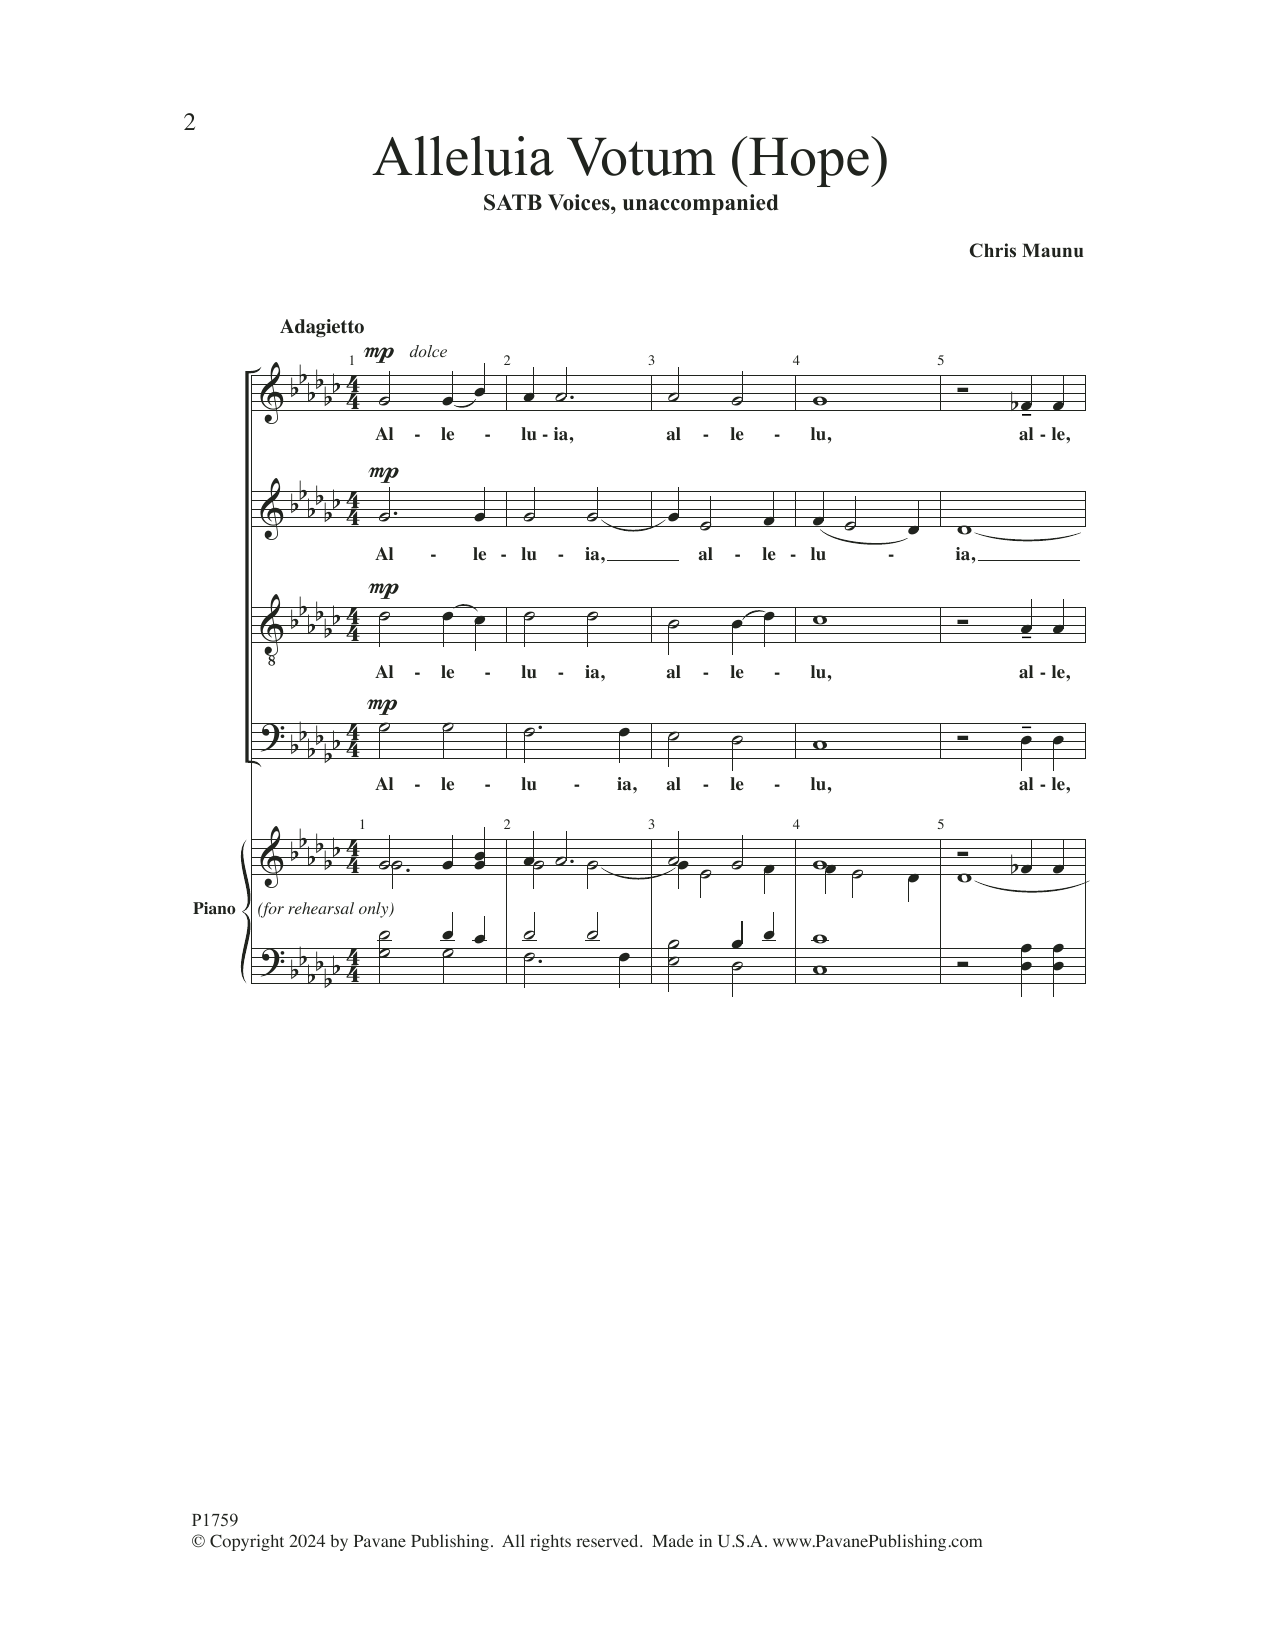 Chris Maunu Alleluia Votum Sheet Music Notes & Chords for Choir - Download or Print PDF